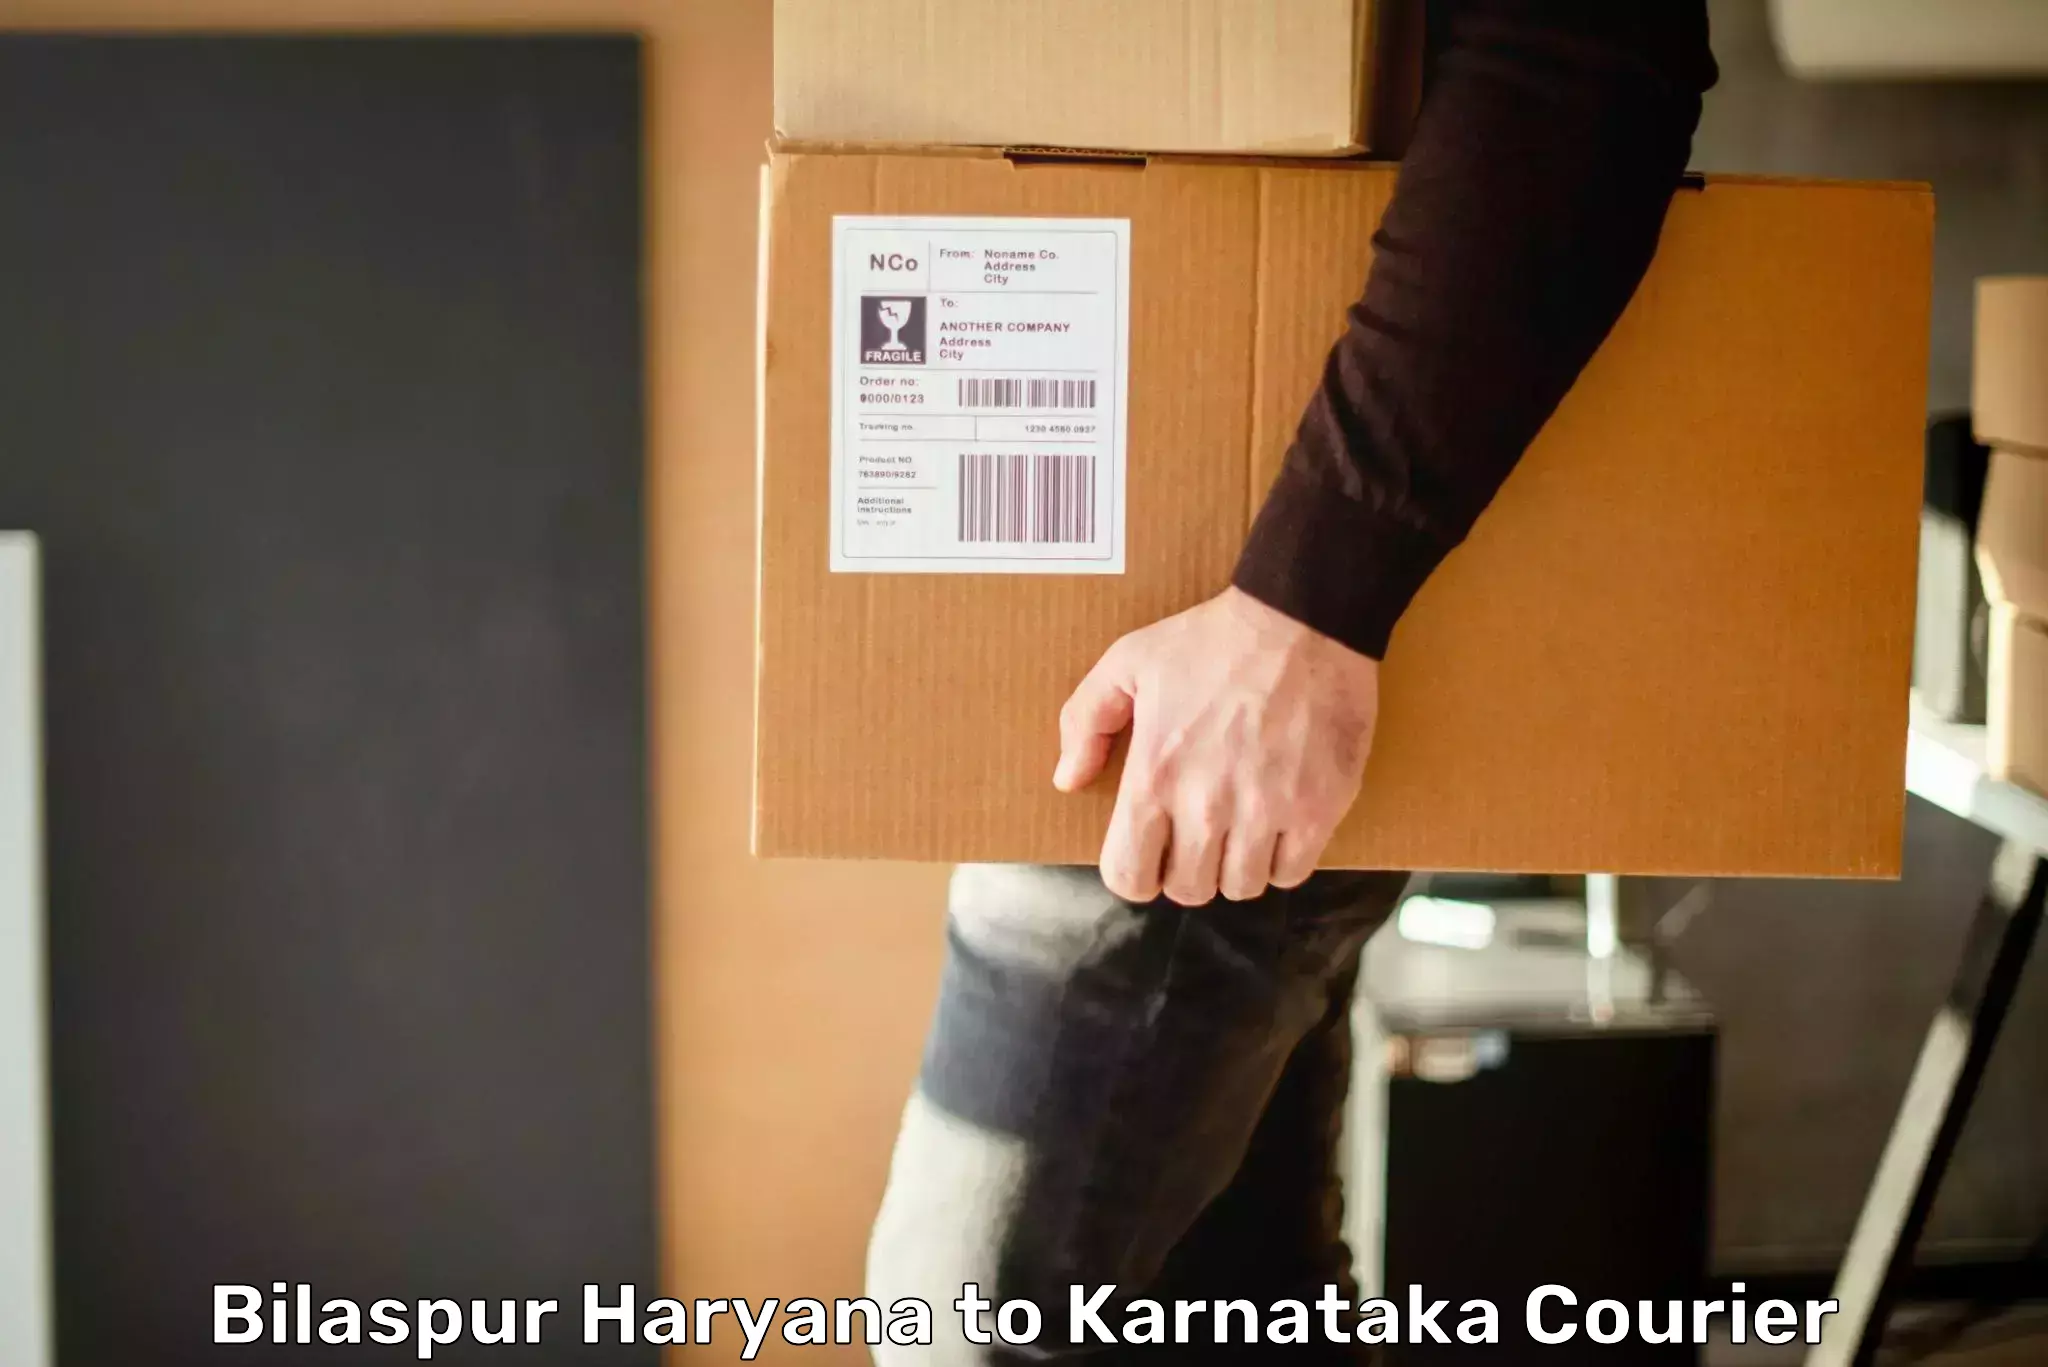 Courier service innovation in Bilaspur Haryana to Karnataka